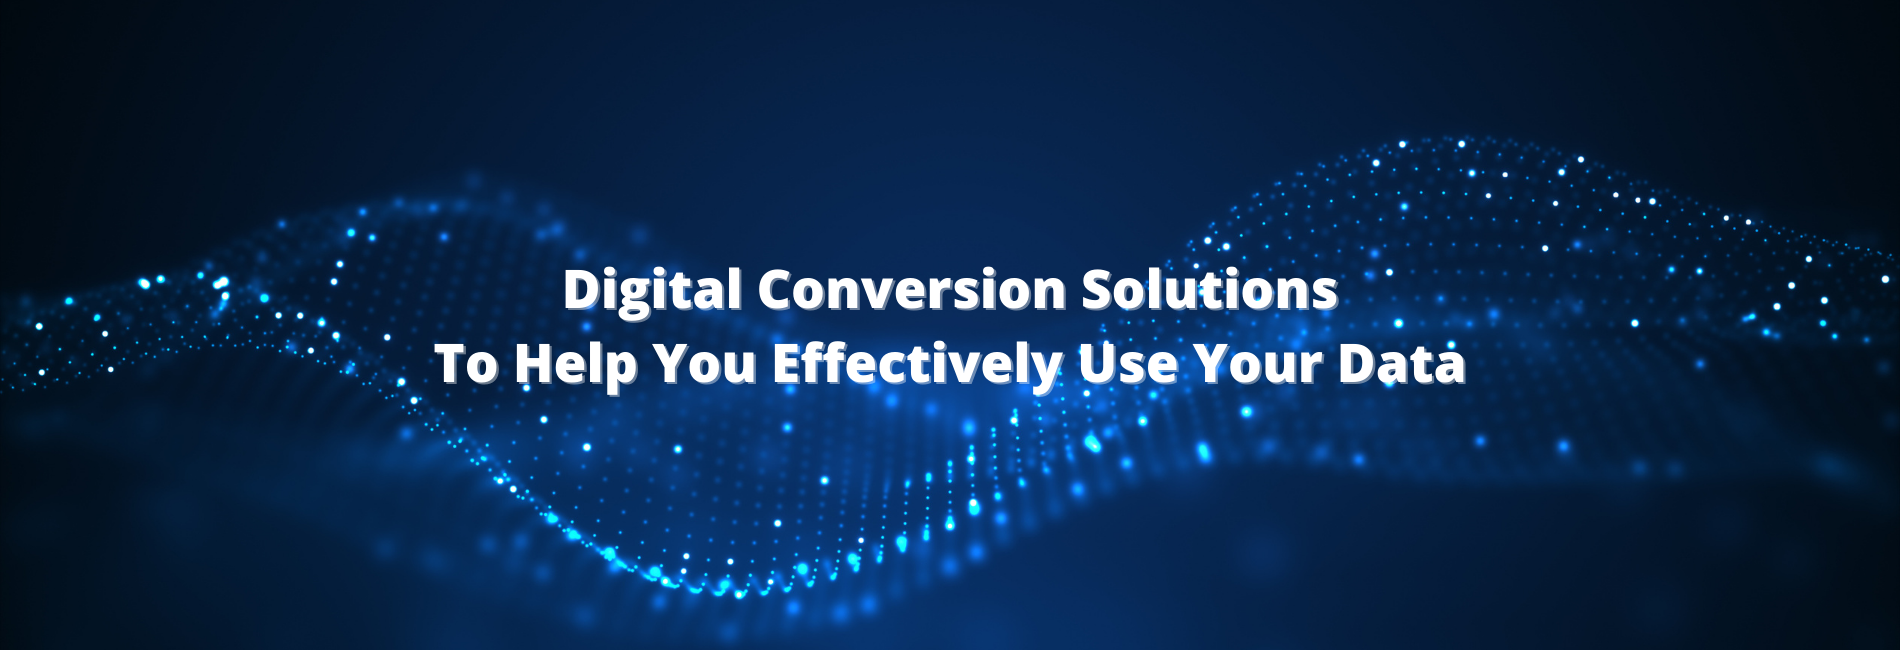 Digital Conversion Solutions Tech Wave